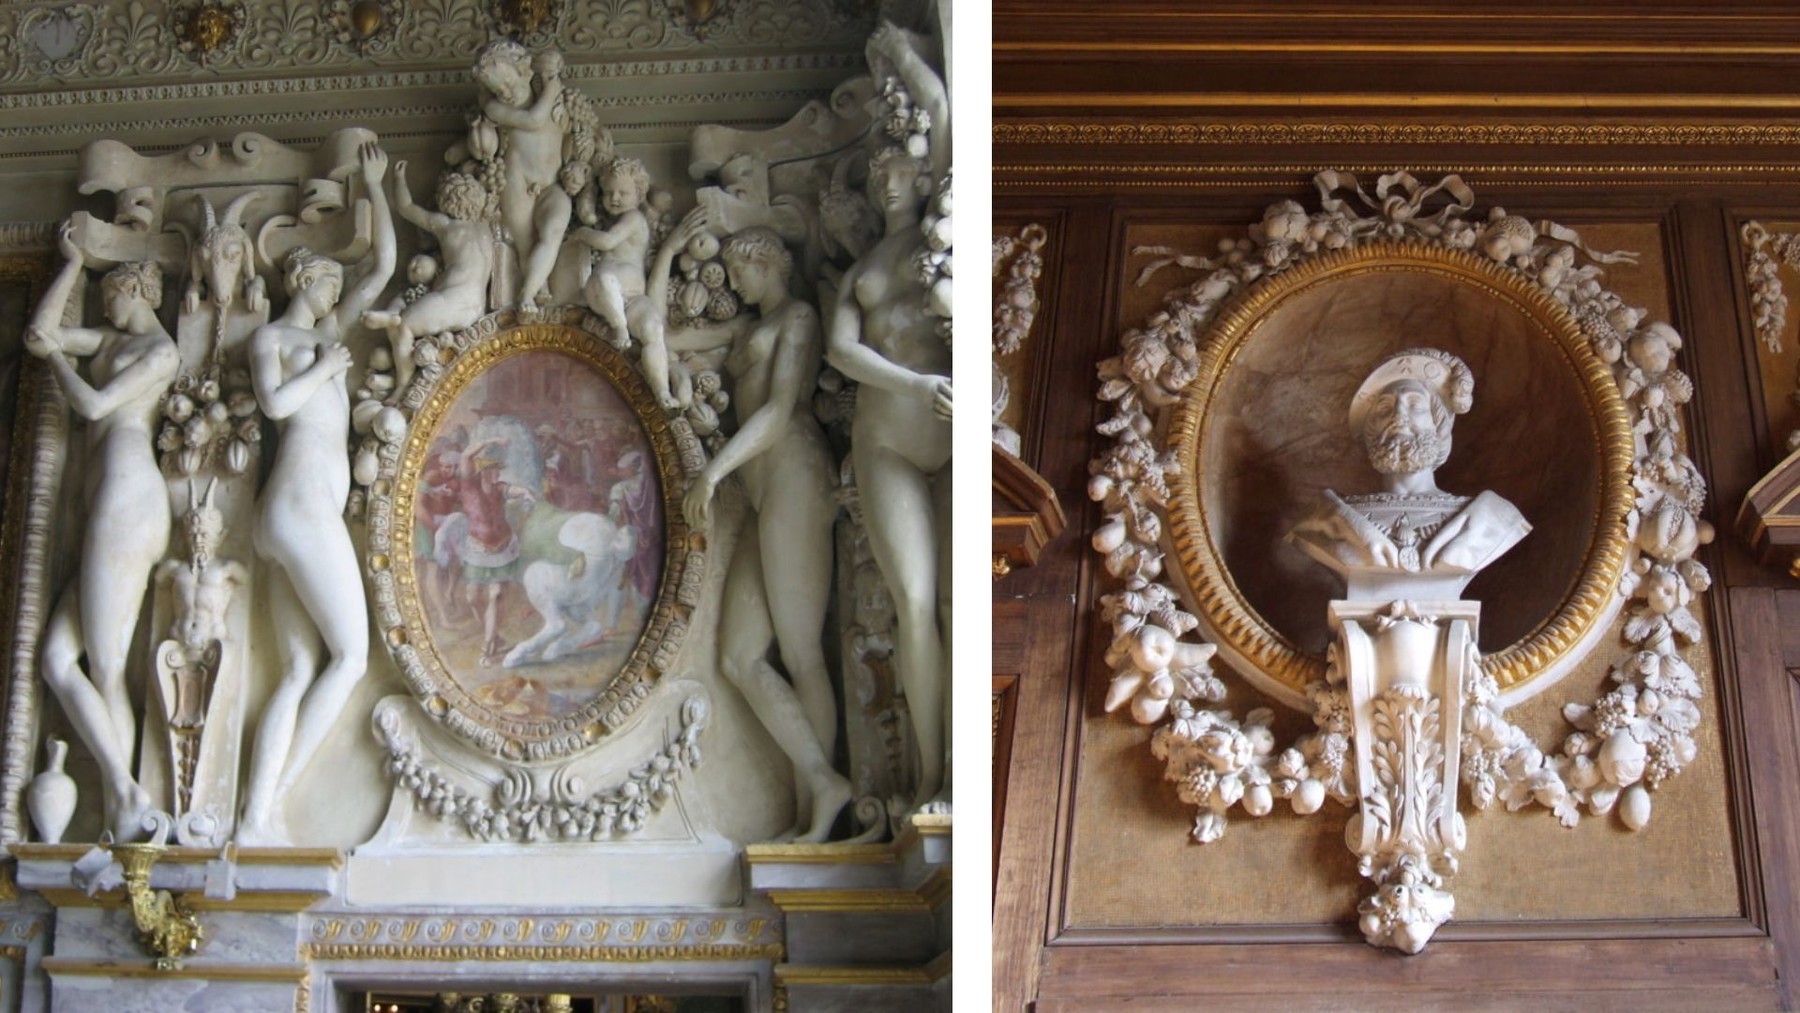 Palace of Fontainebleau - Wikipedia